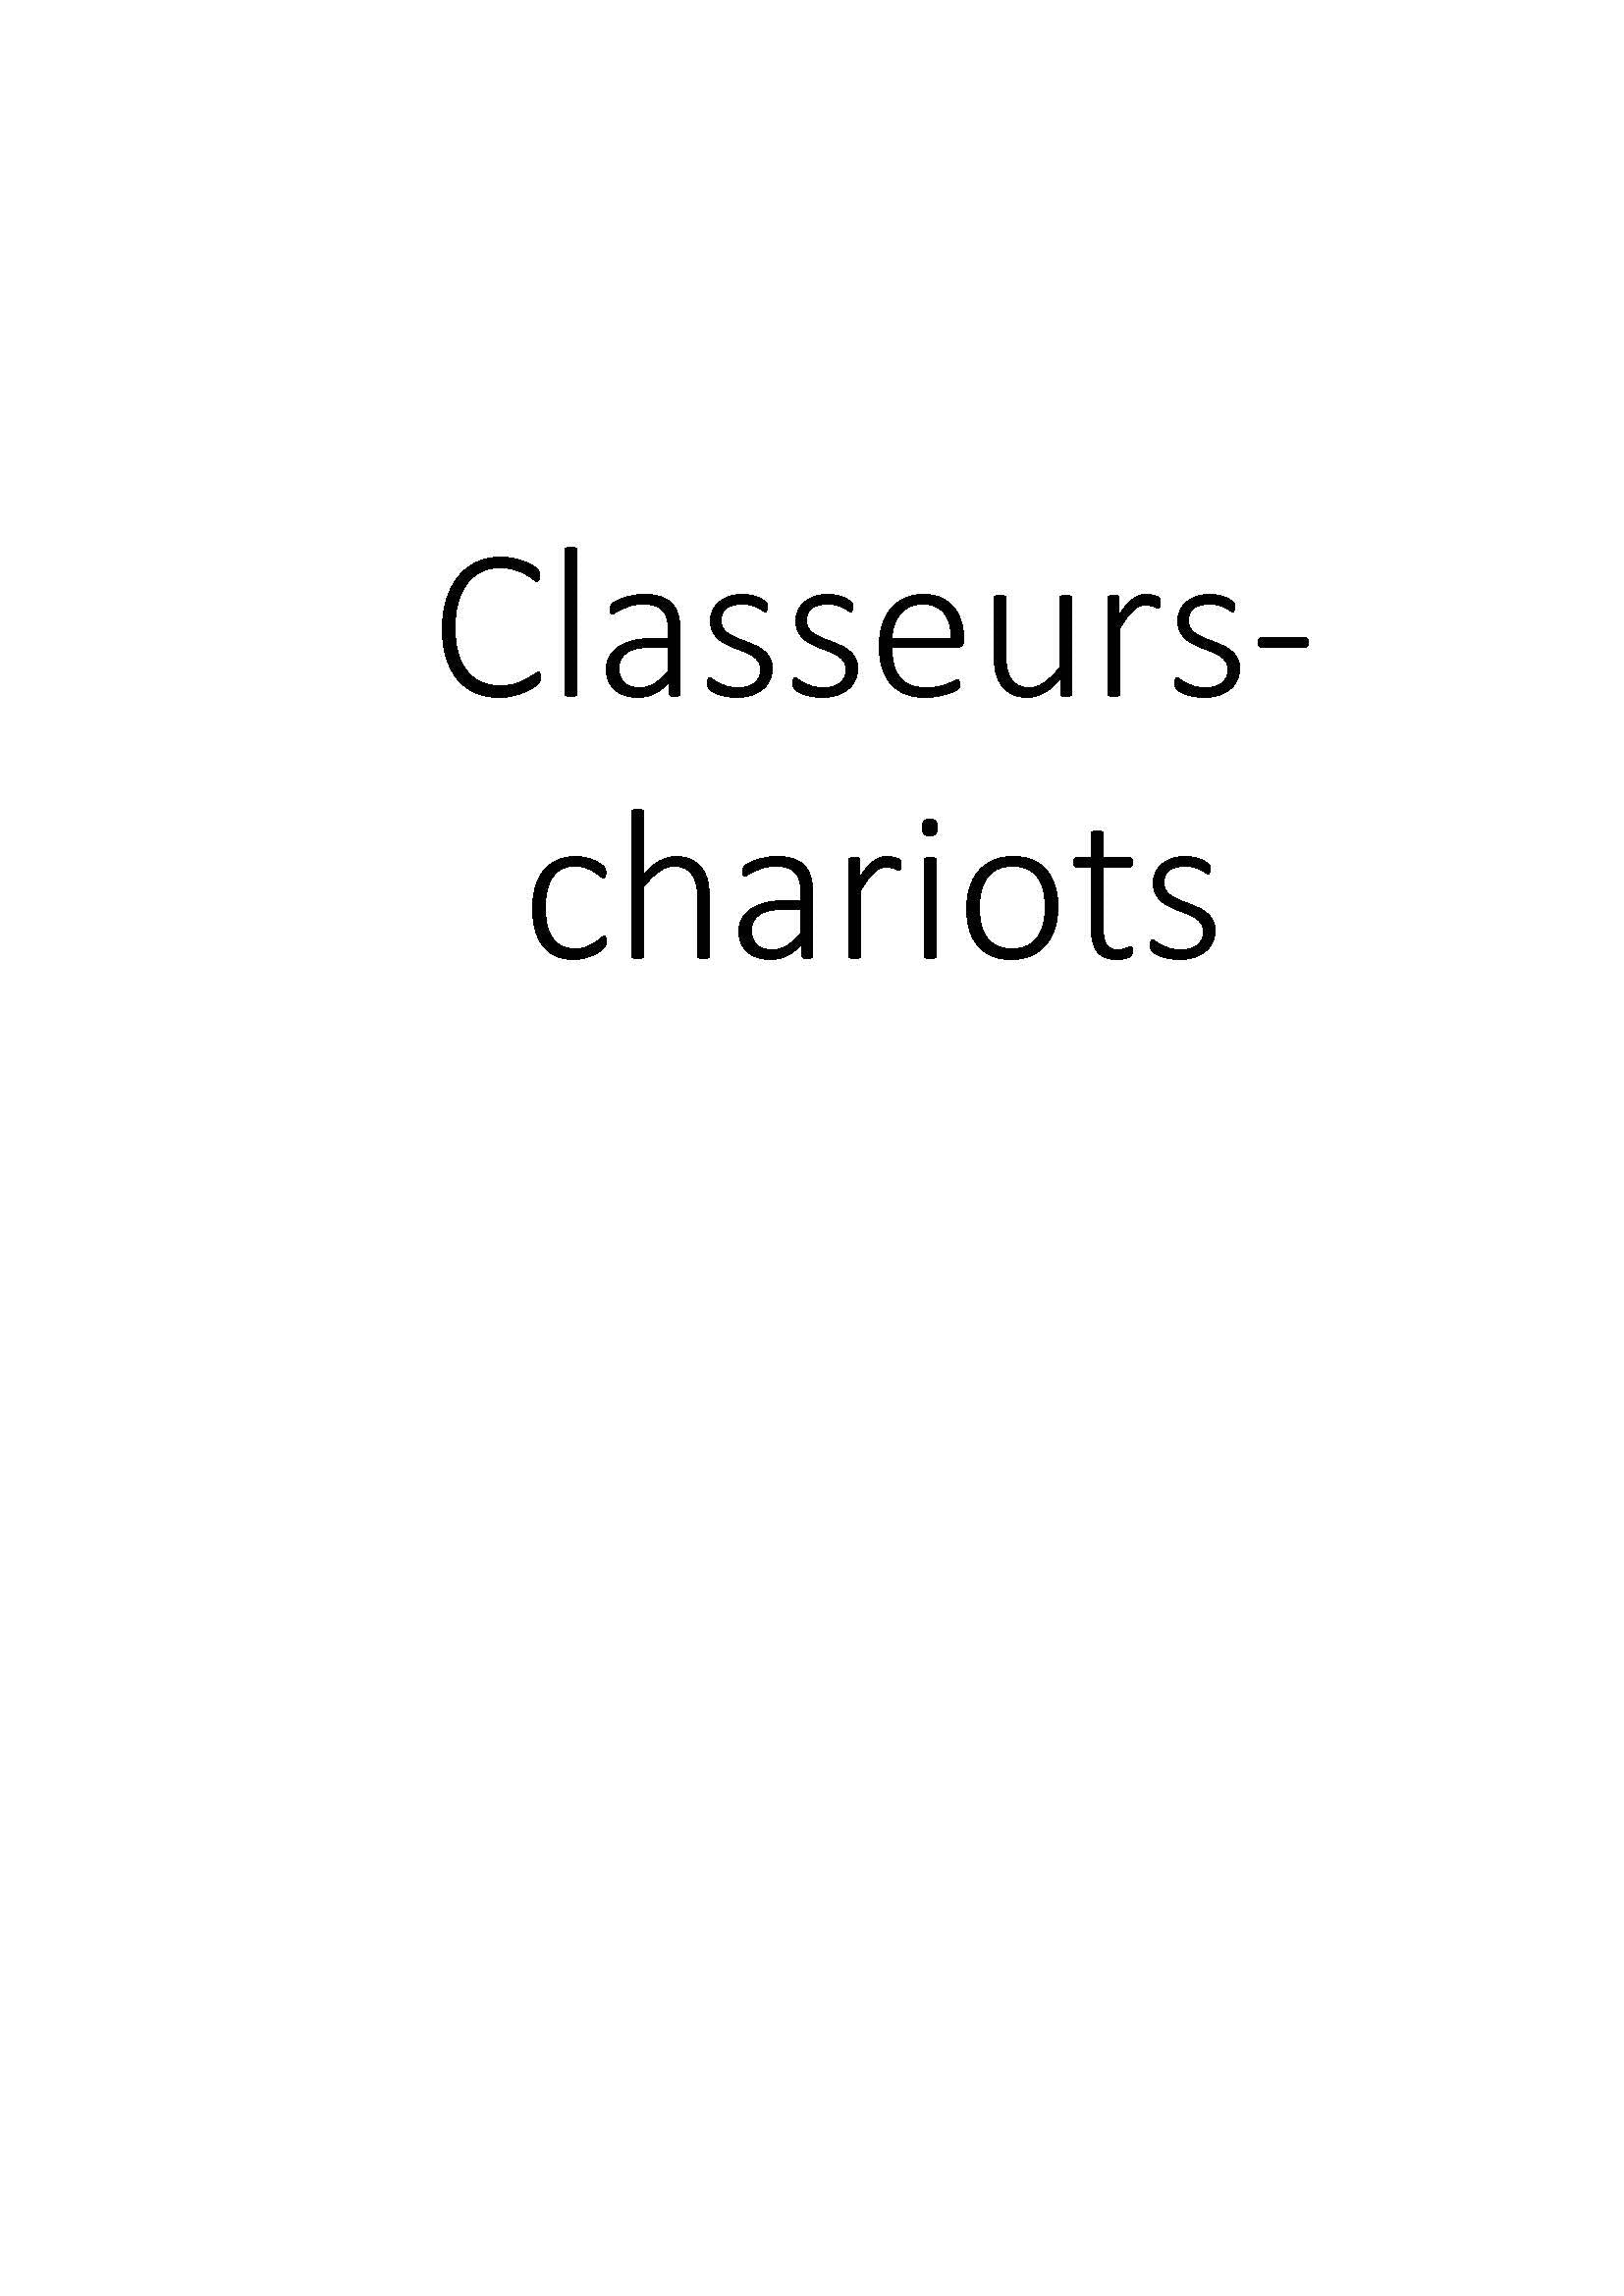 Classeurs-chariots clicktofournisseur.com